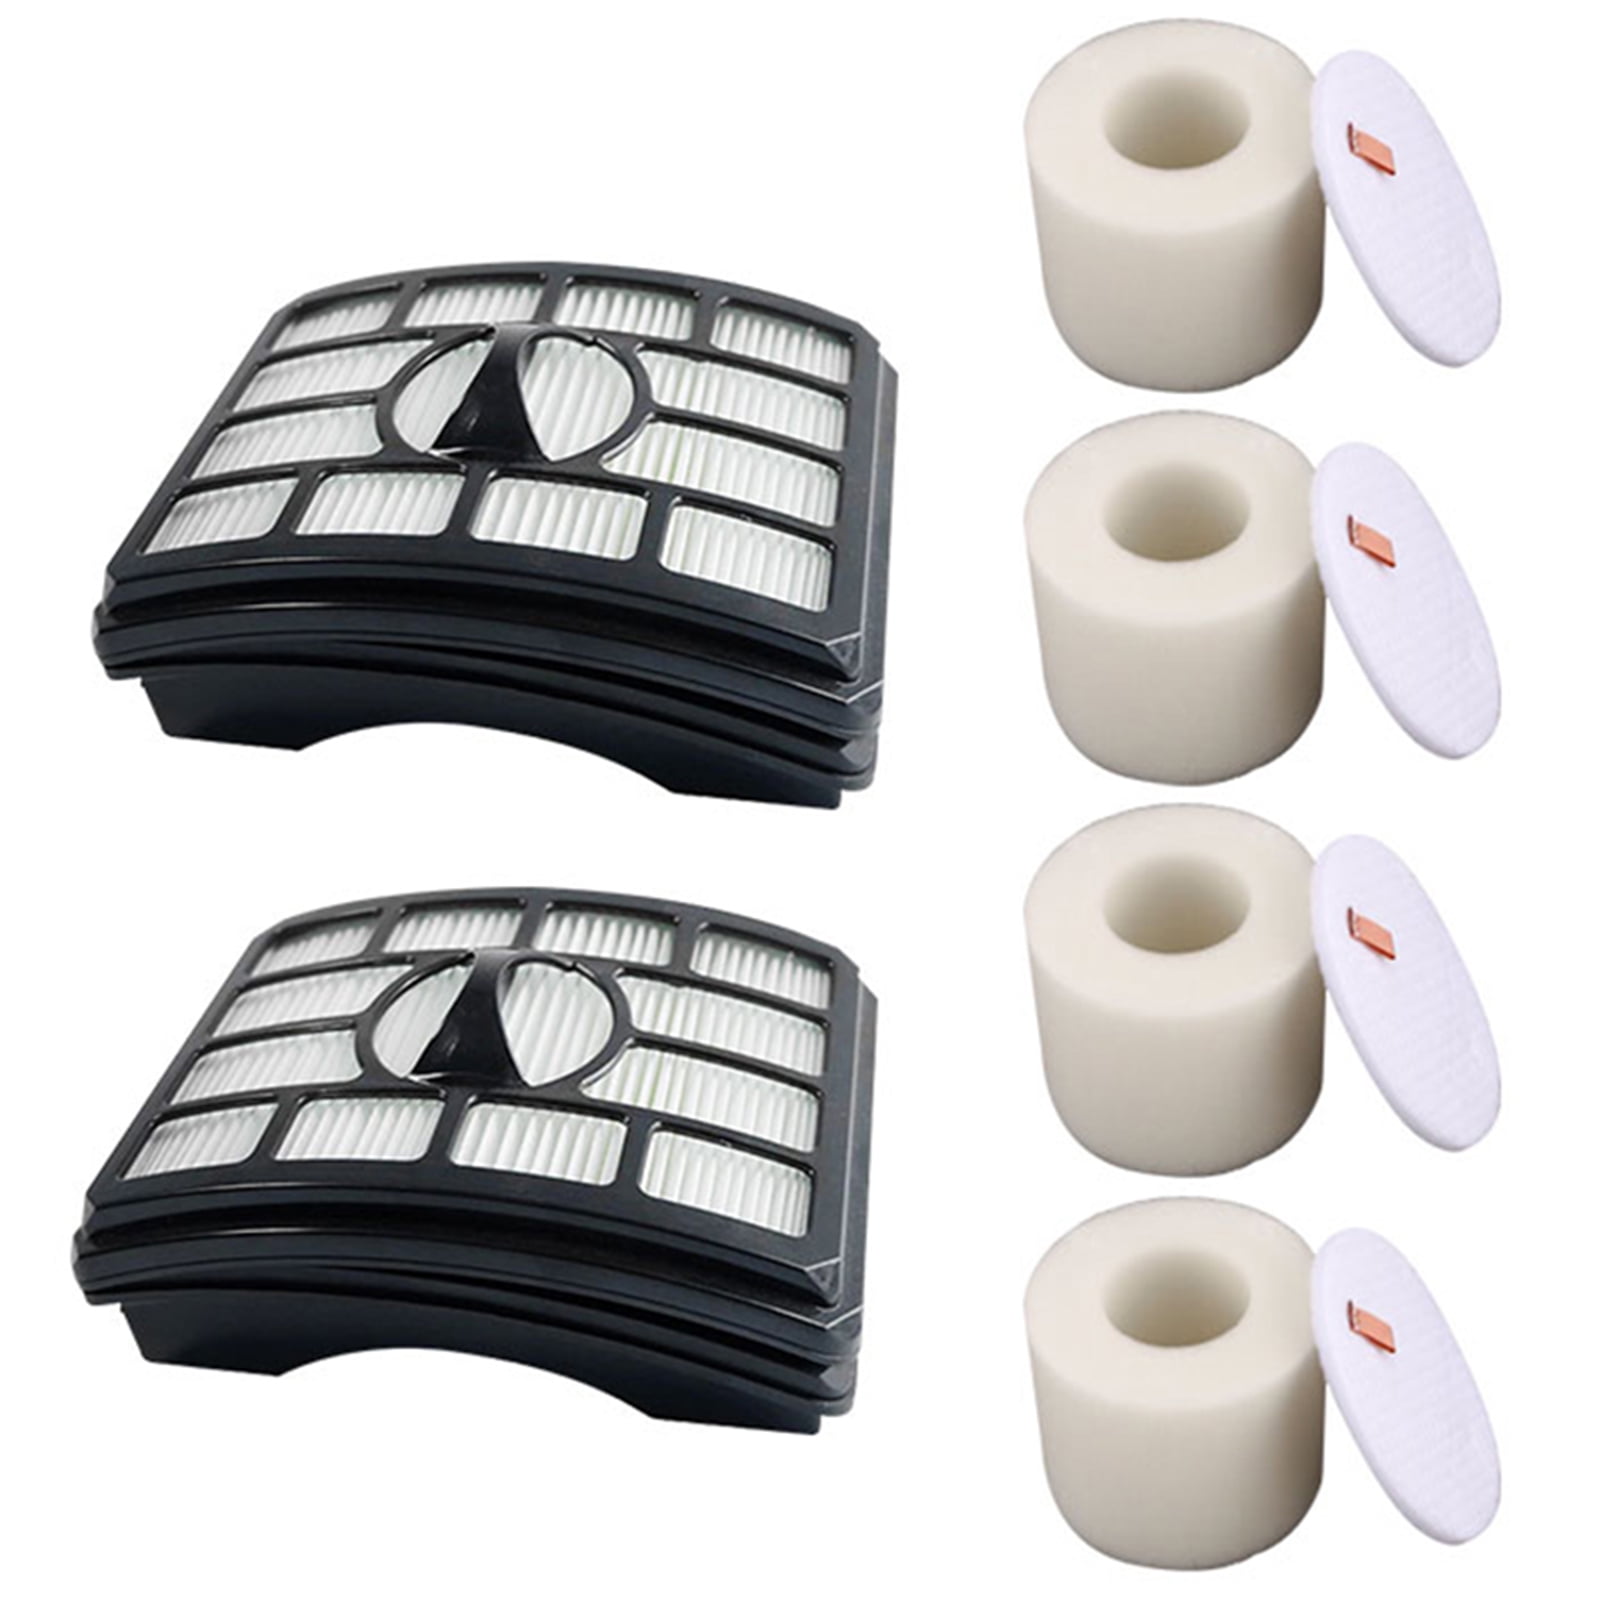 For Shark NV500/NV501/NV5* Vacuum Cleaner Accessories Filter Filter Cotton Set 